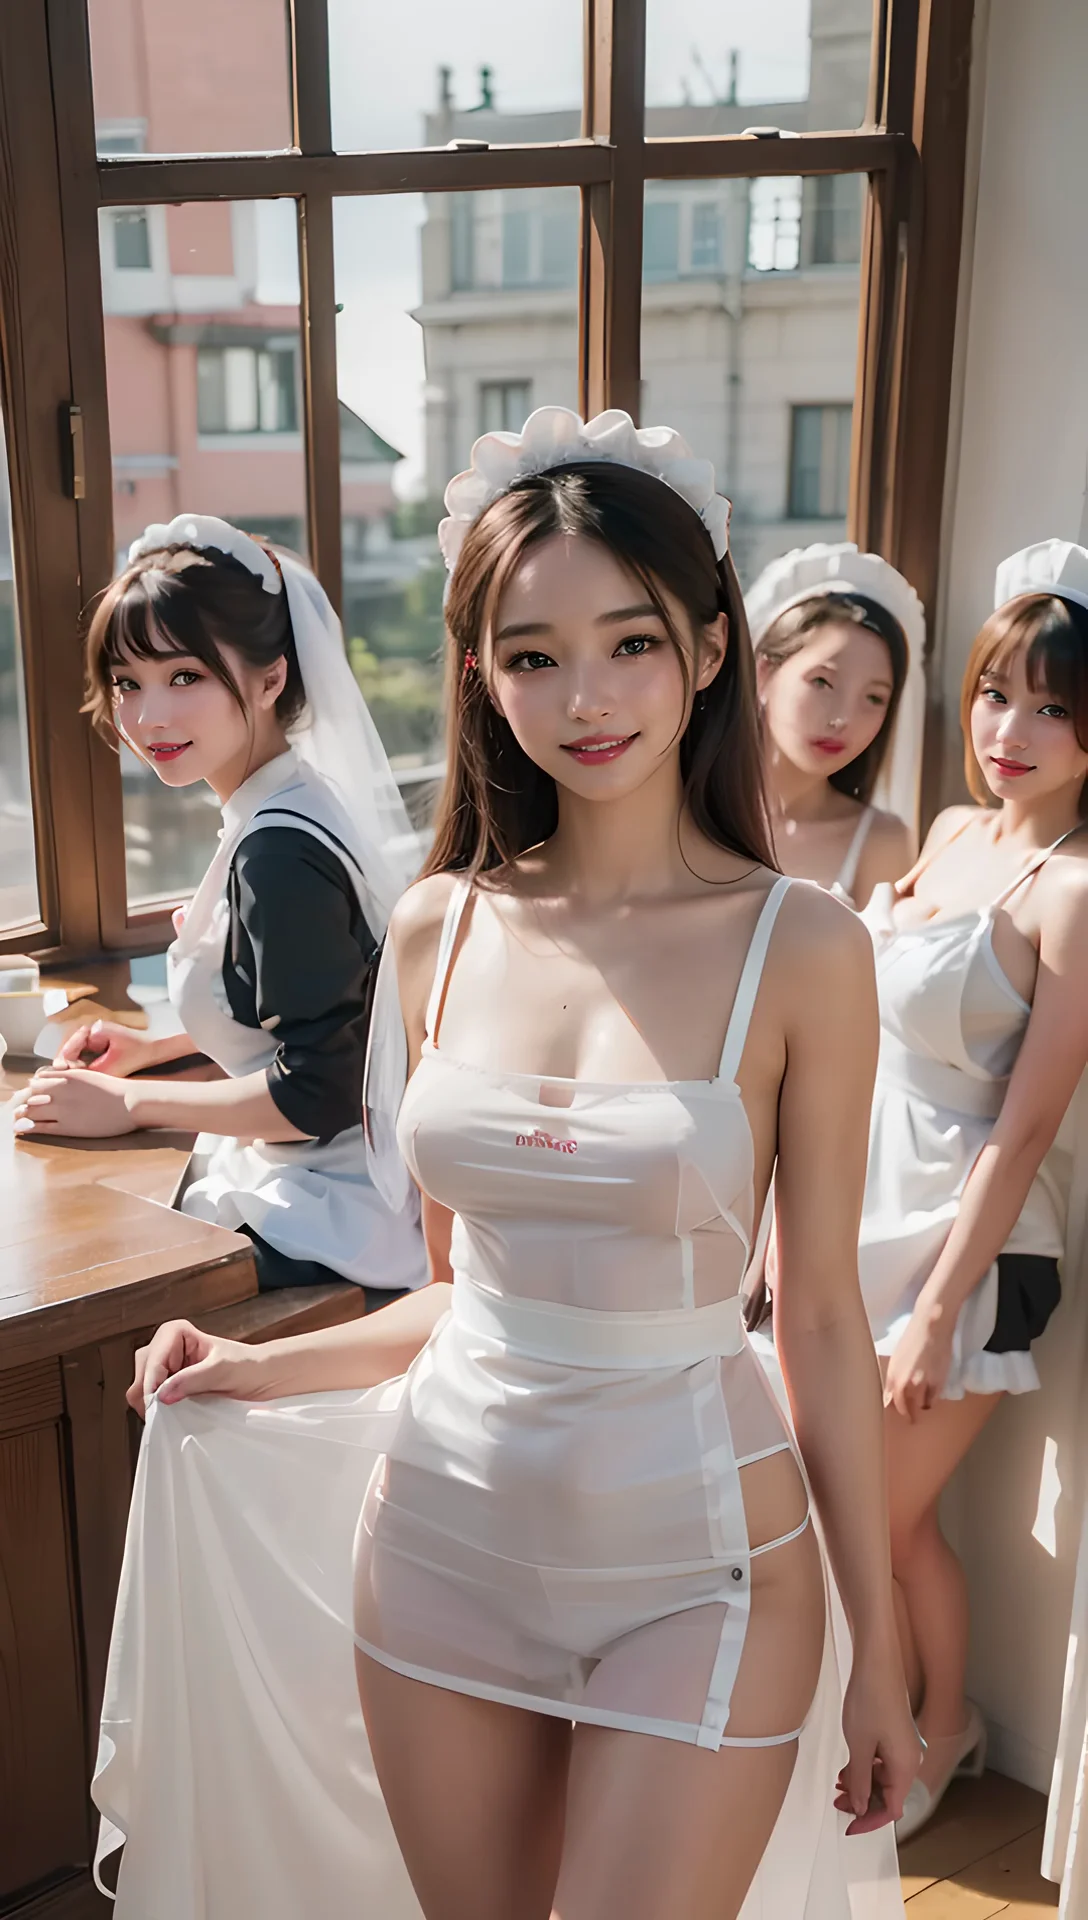 Ai LookBook: Maid Cafe Japan Images 15